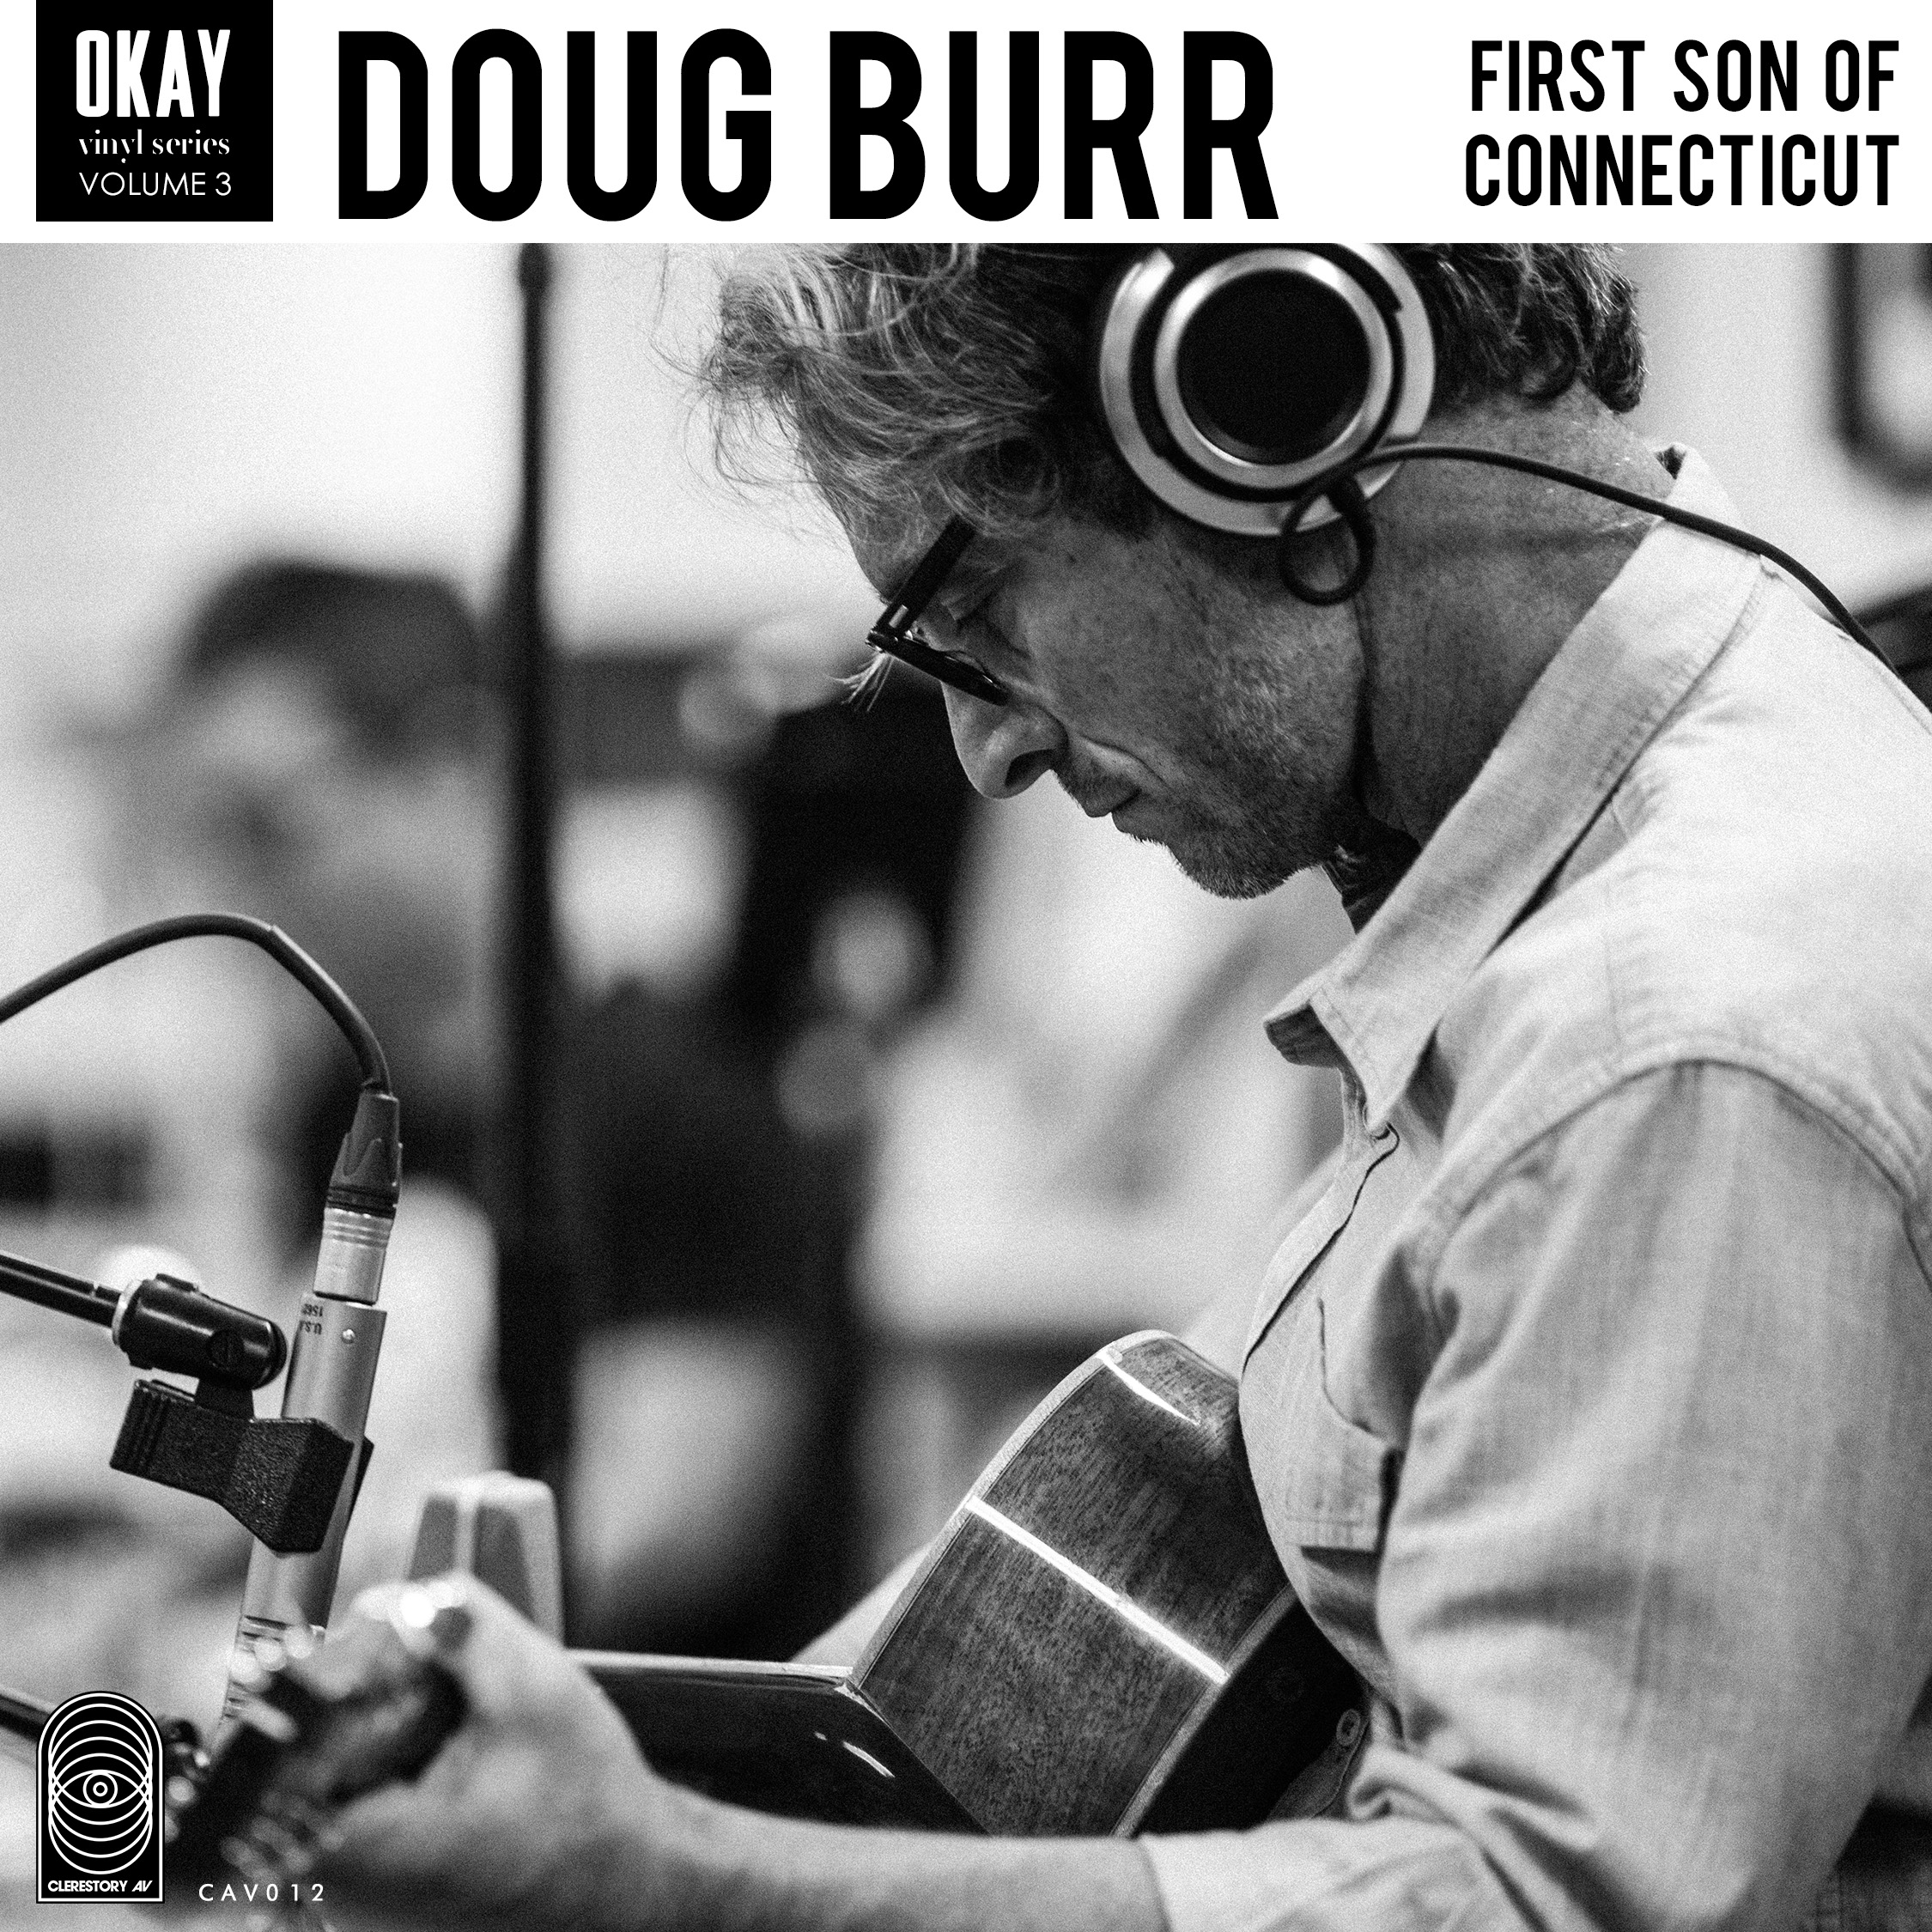 DOUG BURR / OKAY Vinyl Series Vol. 3